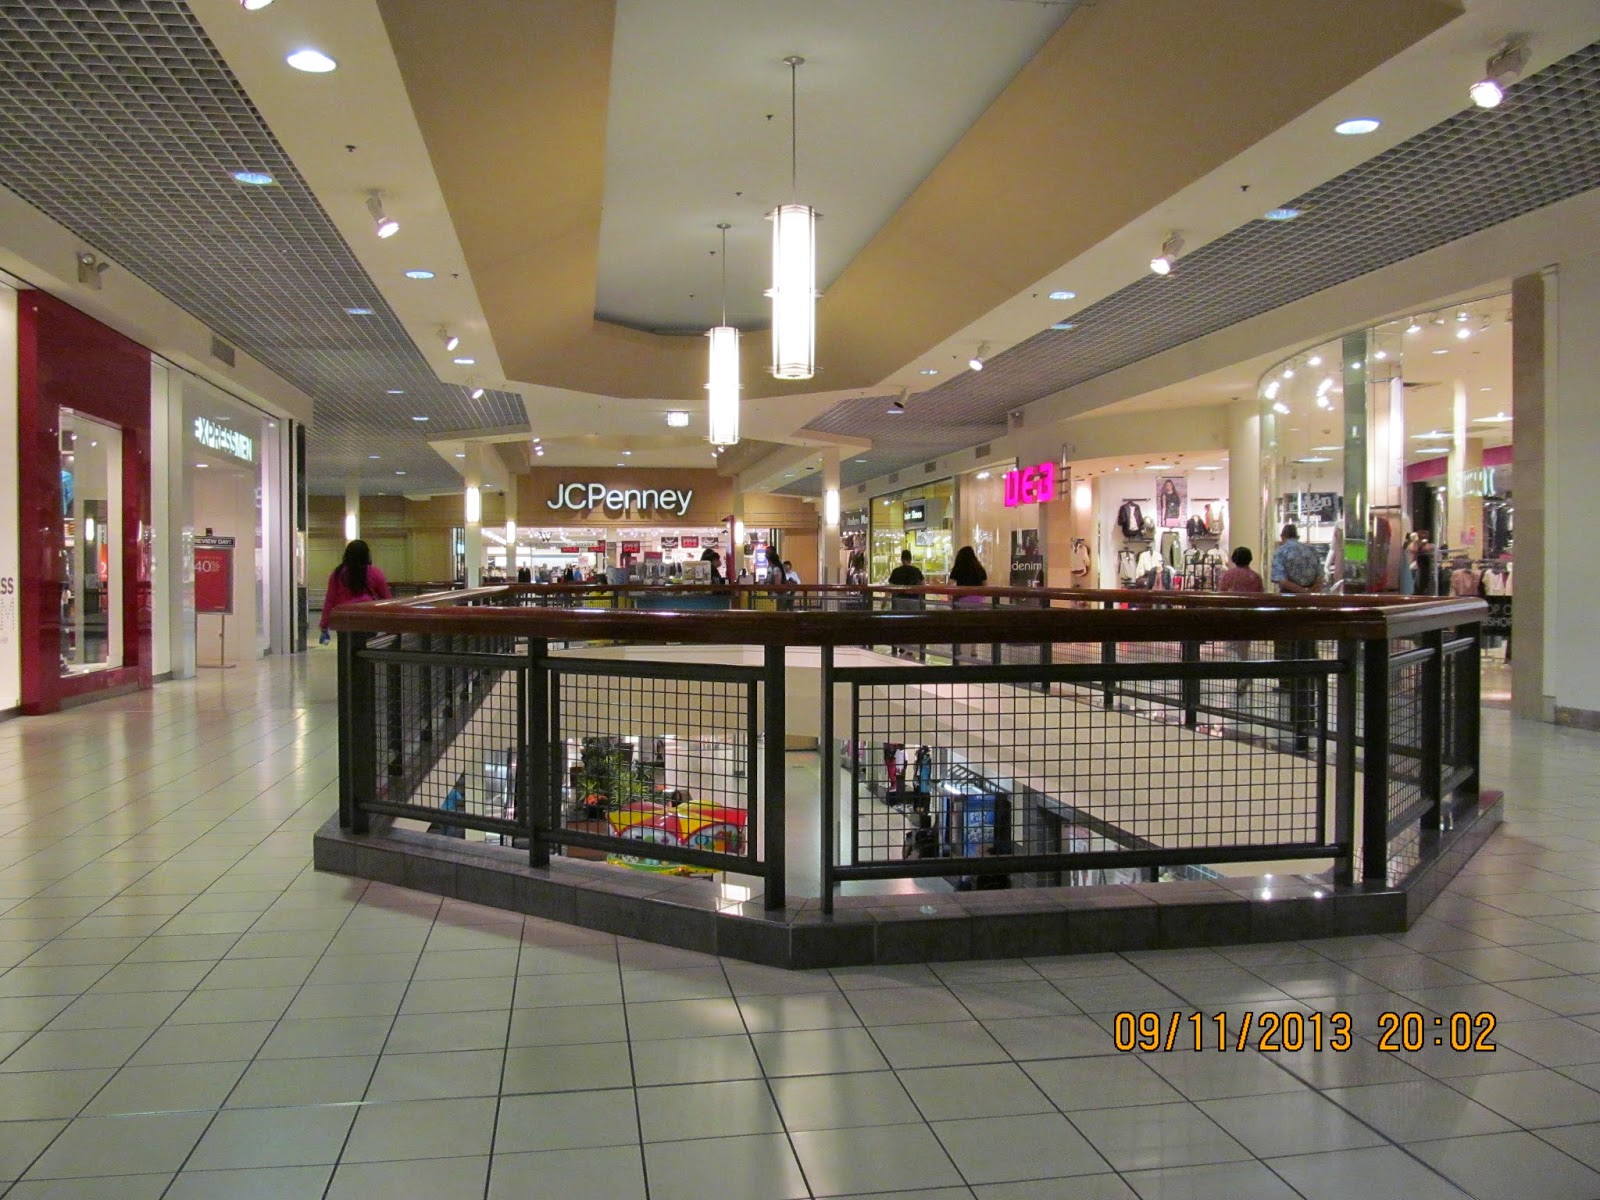 North Riverside Park Mall, Riverside, IL, nowhere near as d…